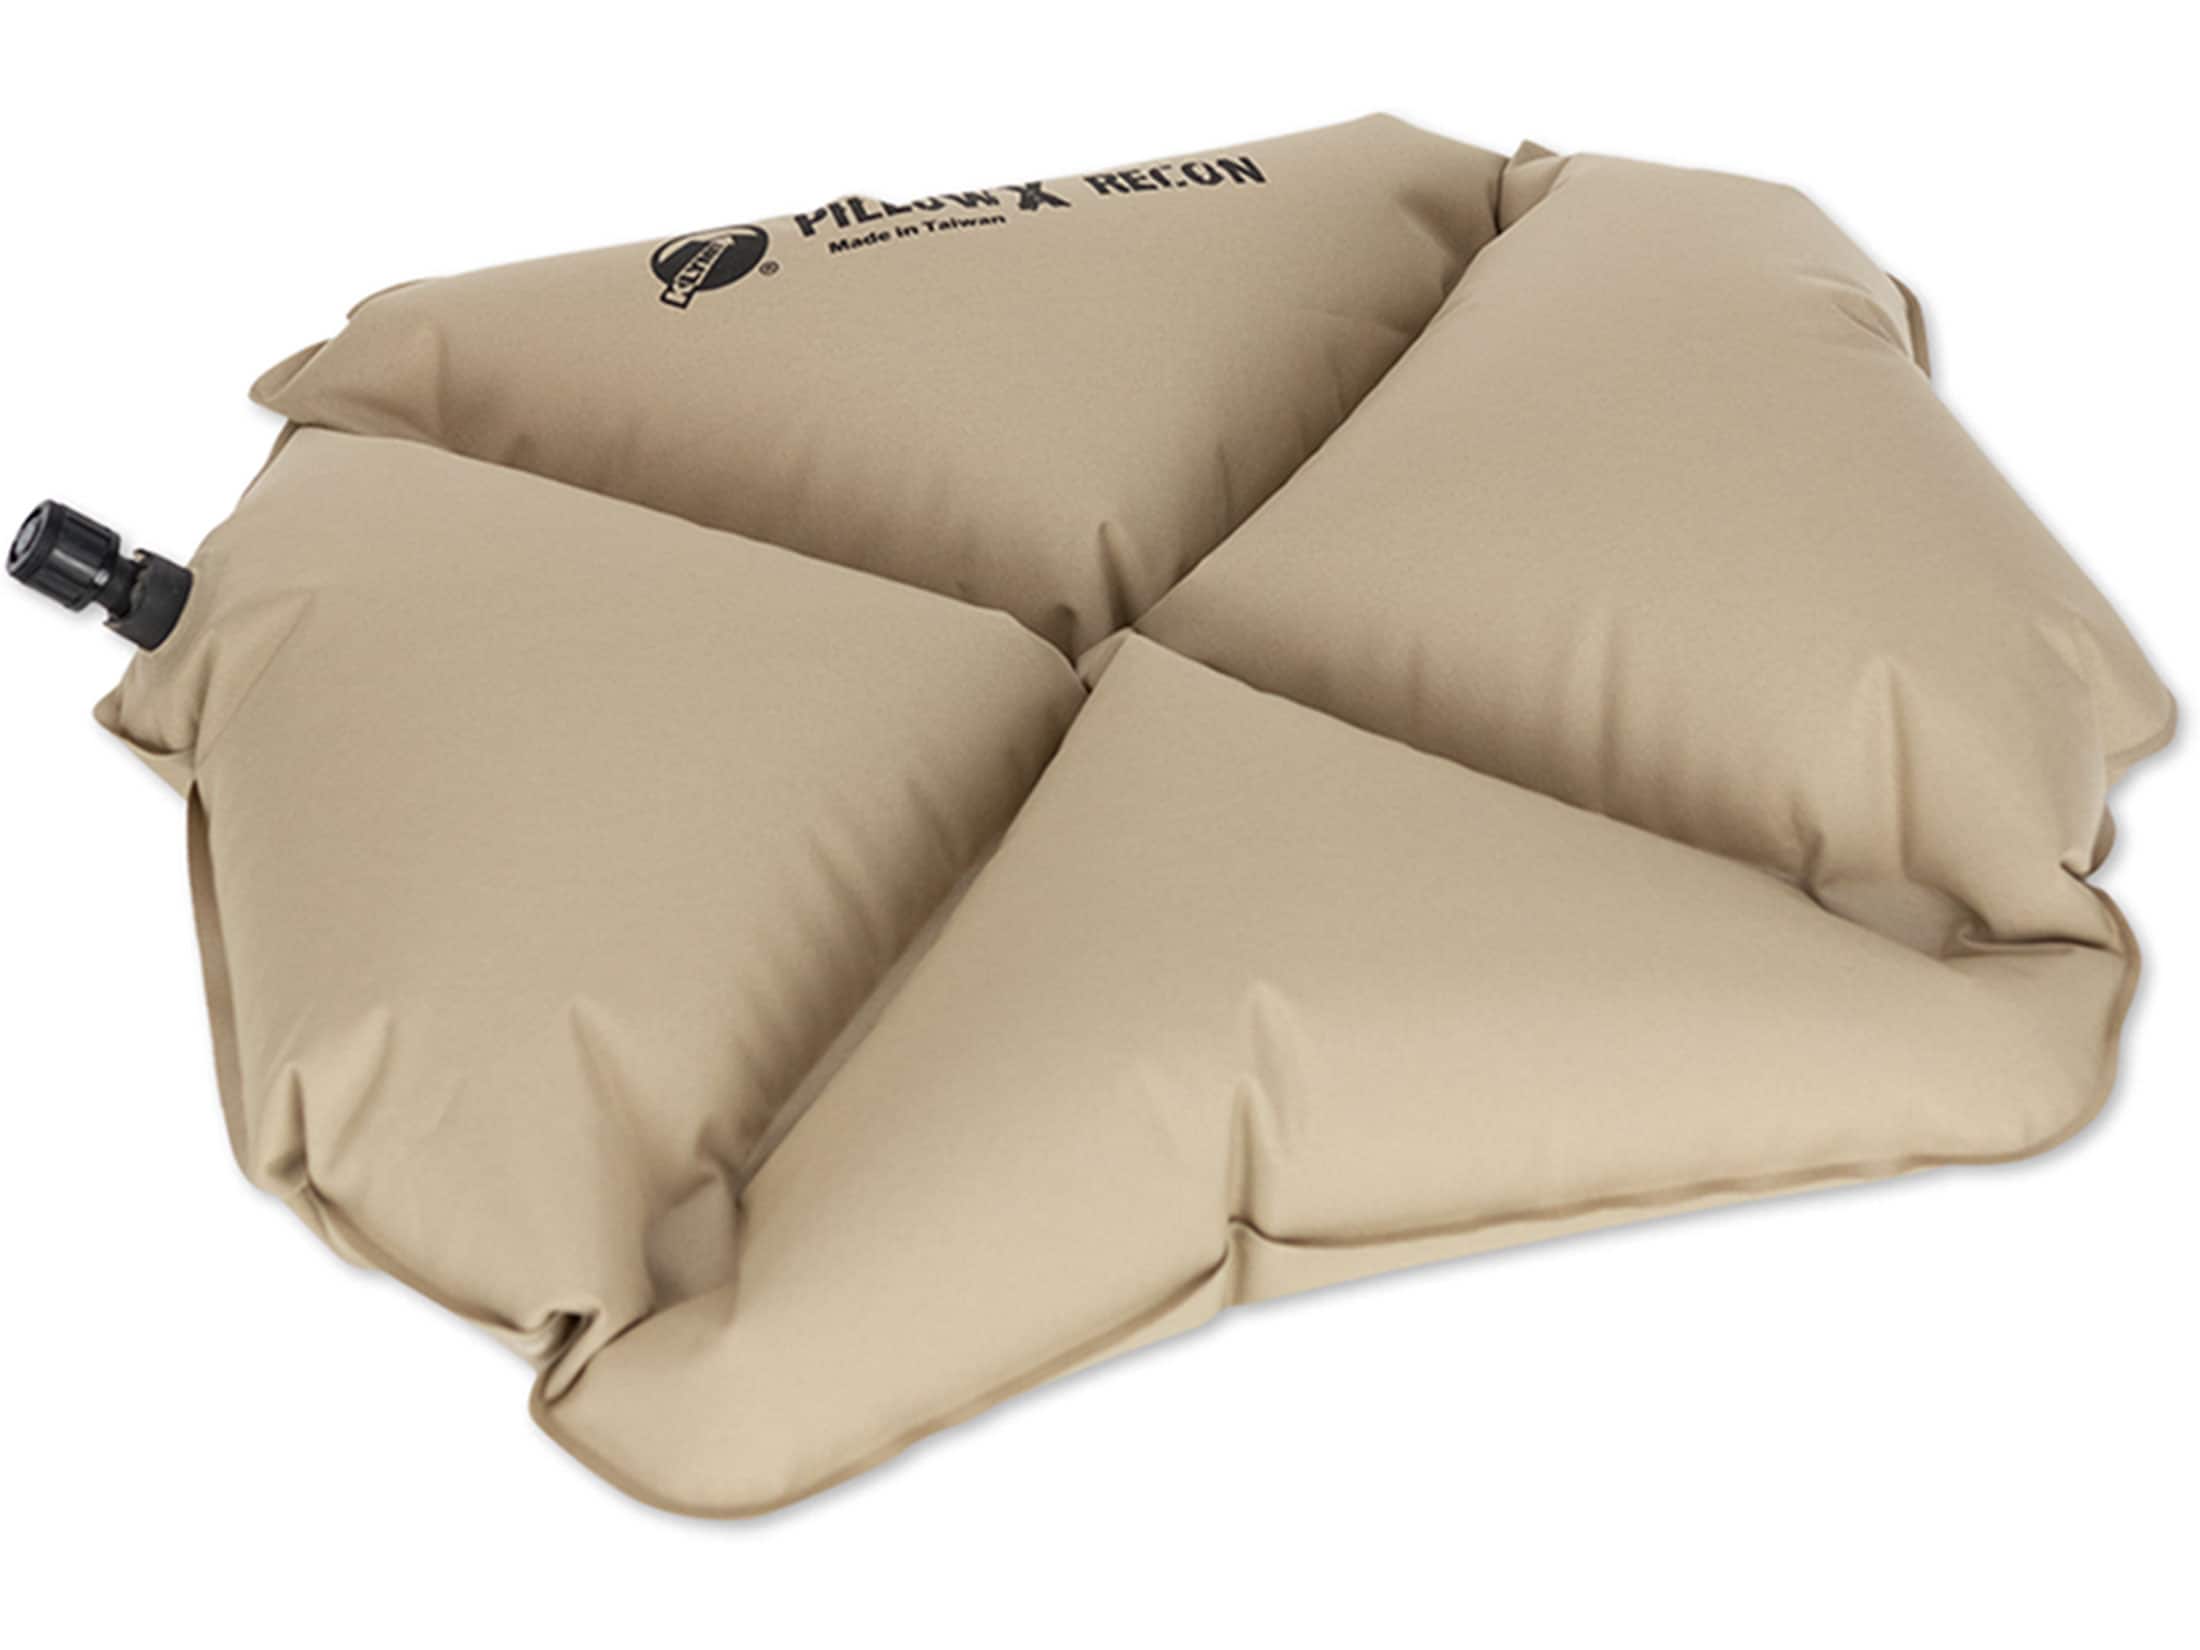 klymit static v inflatable air mattress